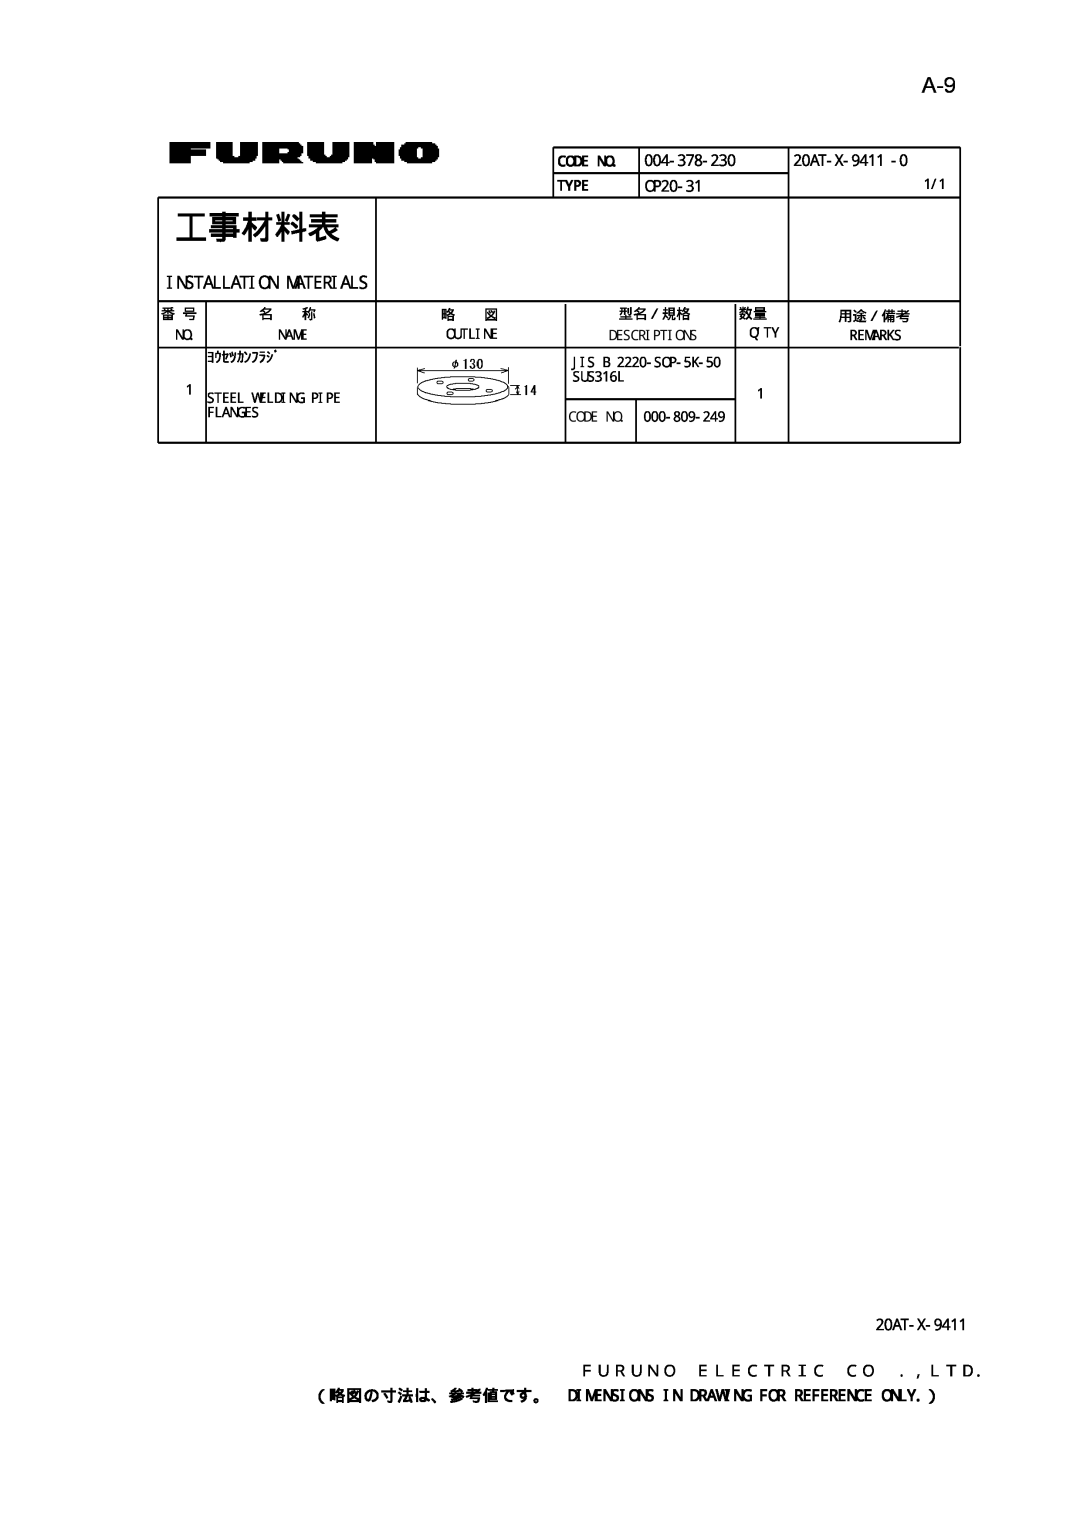 Furuno SC-110 manual 工事材料表, 20AT-X-9411, OP20-31 